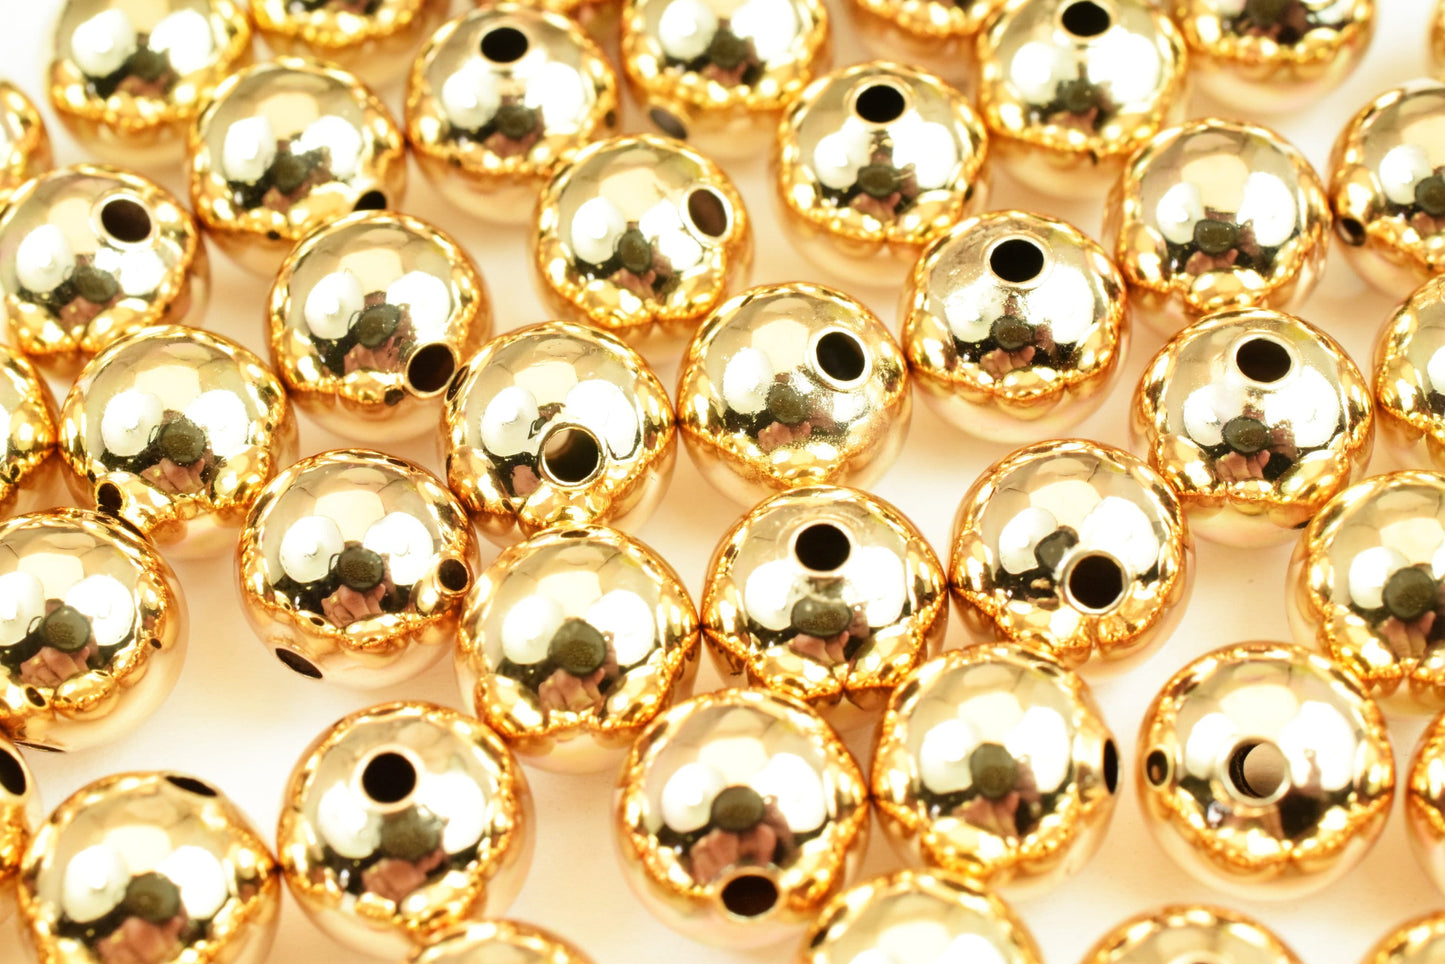 18K Gold Filled Round Beads, Seamless Ball 2mm/3mm/4mm/5mm/6mm/7mm/ 8mm/10mm/12mm/14mm/16mm/18mm/20mm Spacer Findings Jewelry USA Seller - BeadsFindingDepot